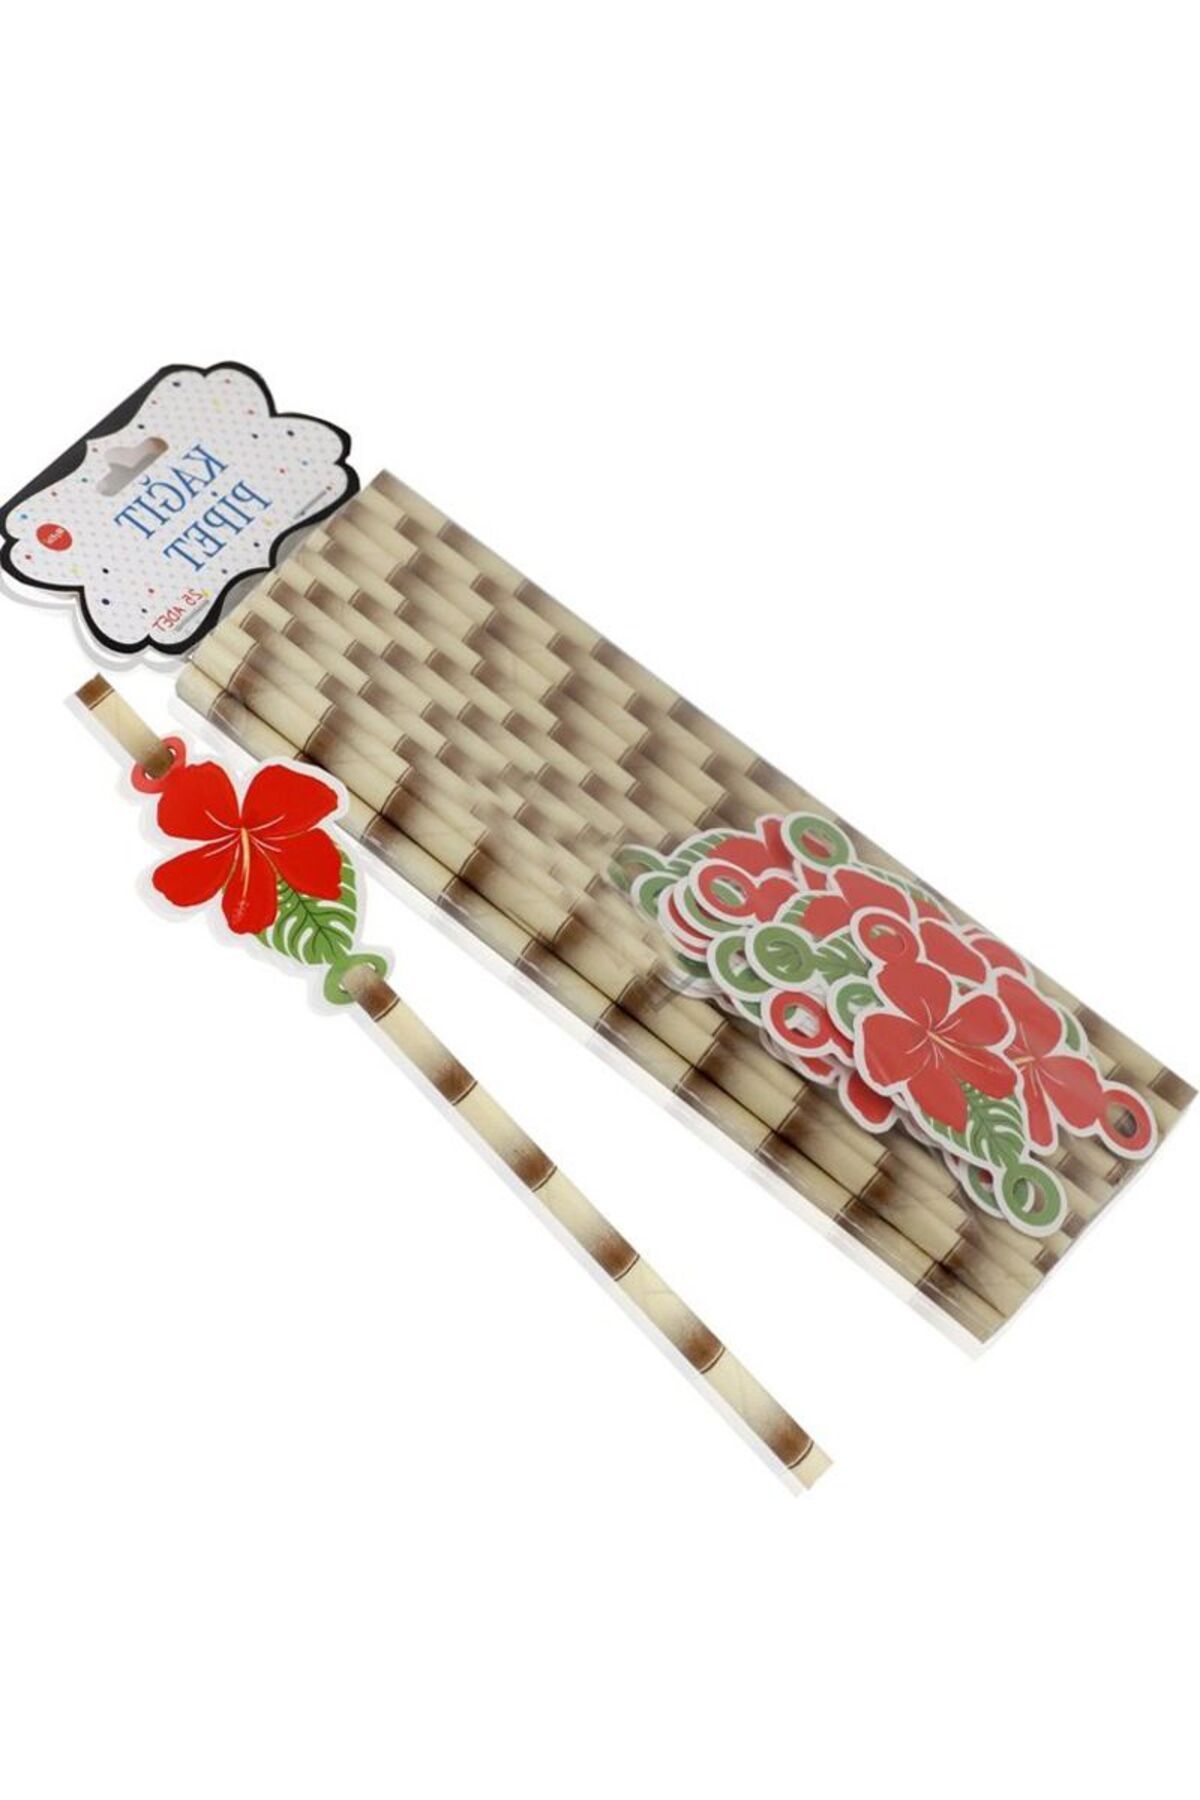 partidolu Hawaian Hibiscus Hibiskus Çiçekli Bambu Model Pipet Kağıt 25 Adet Kırmızı Renk